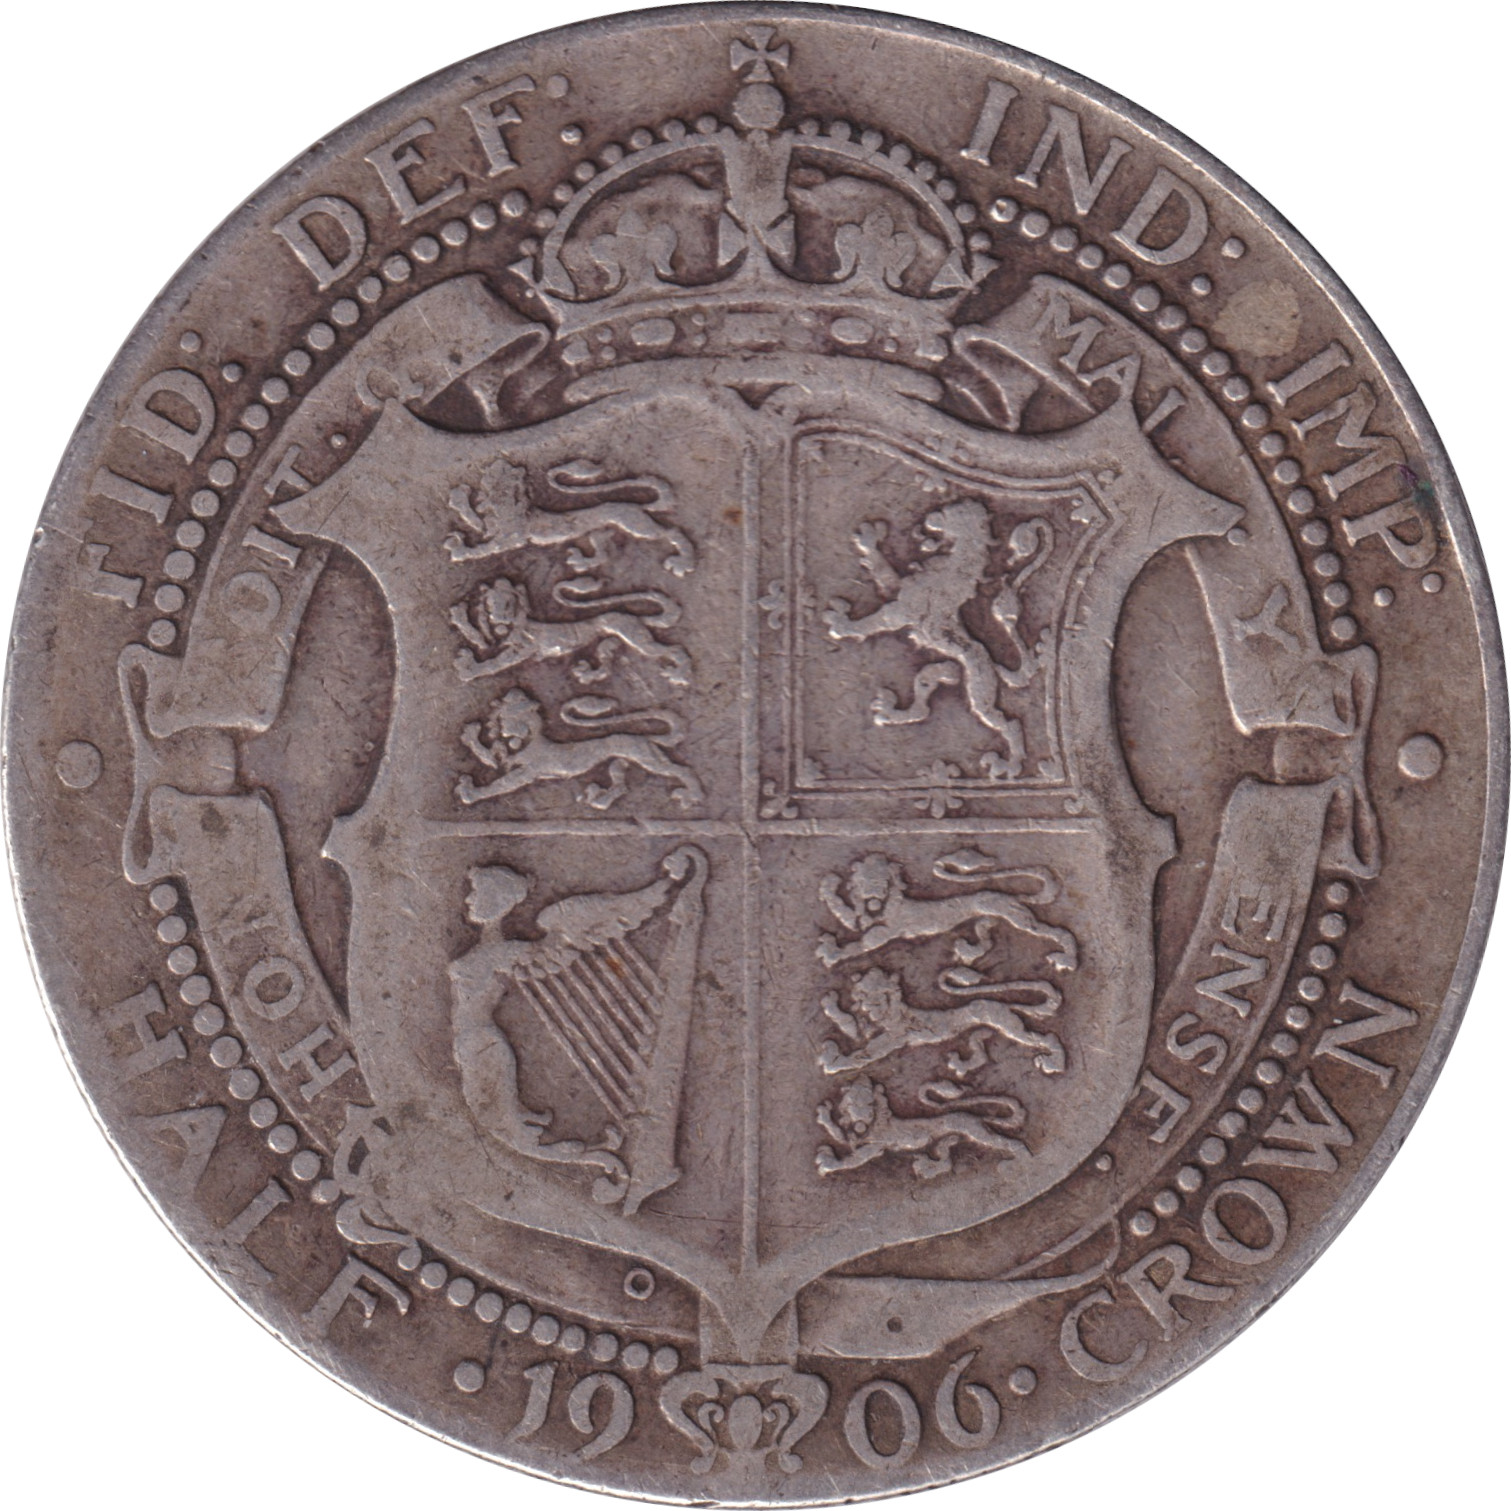 1/2 crown - Edward VII